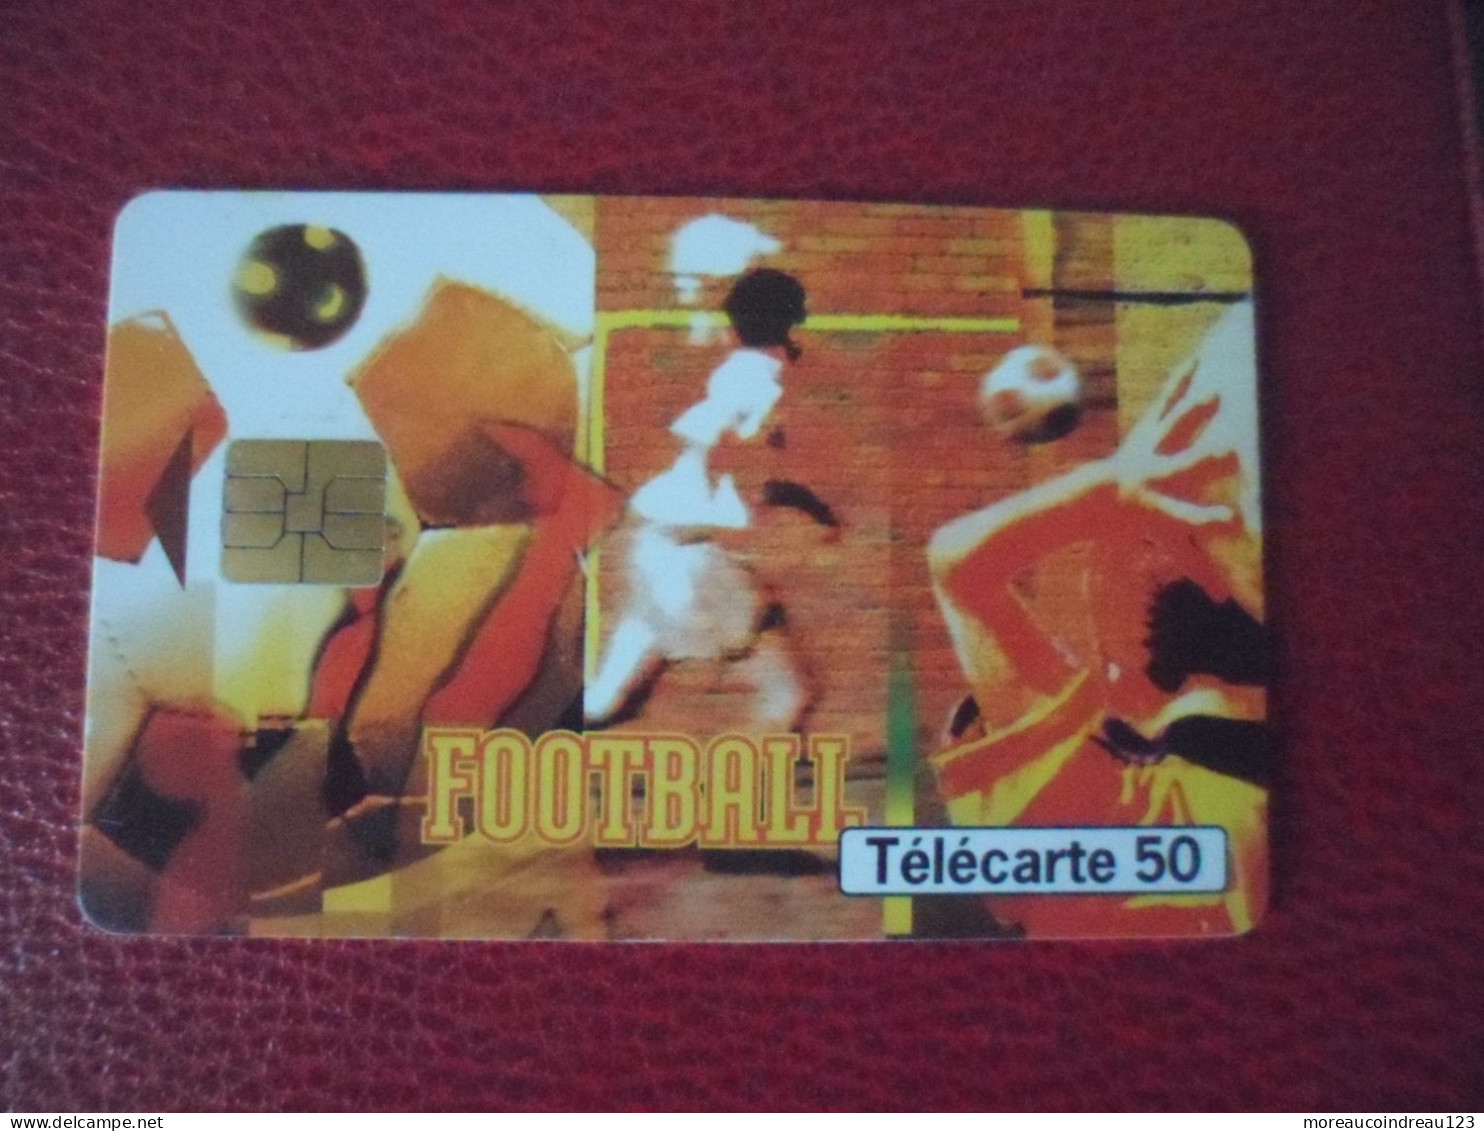 Télécarte France Télécom Street Culture 6 Football - Telecom Operators